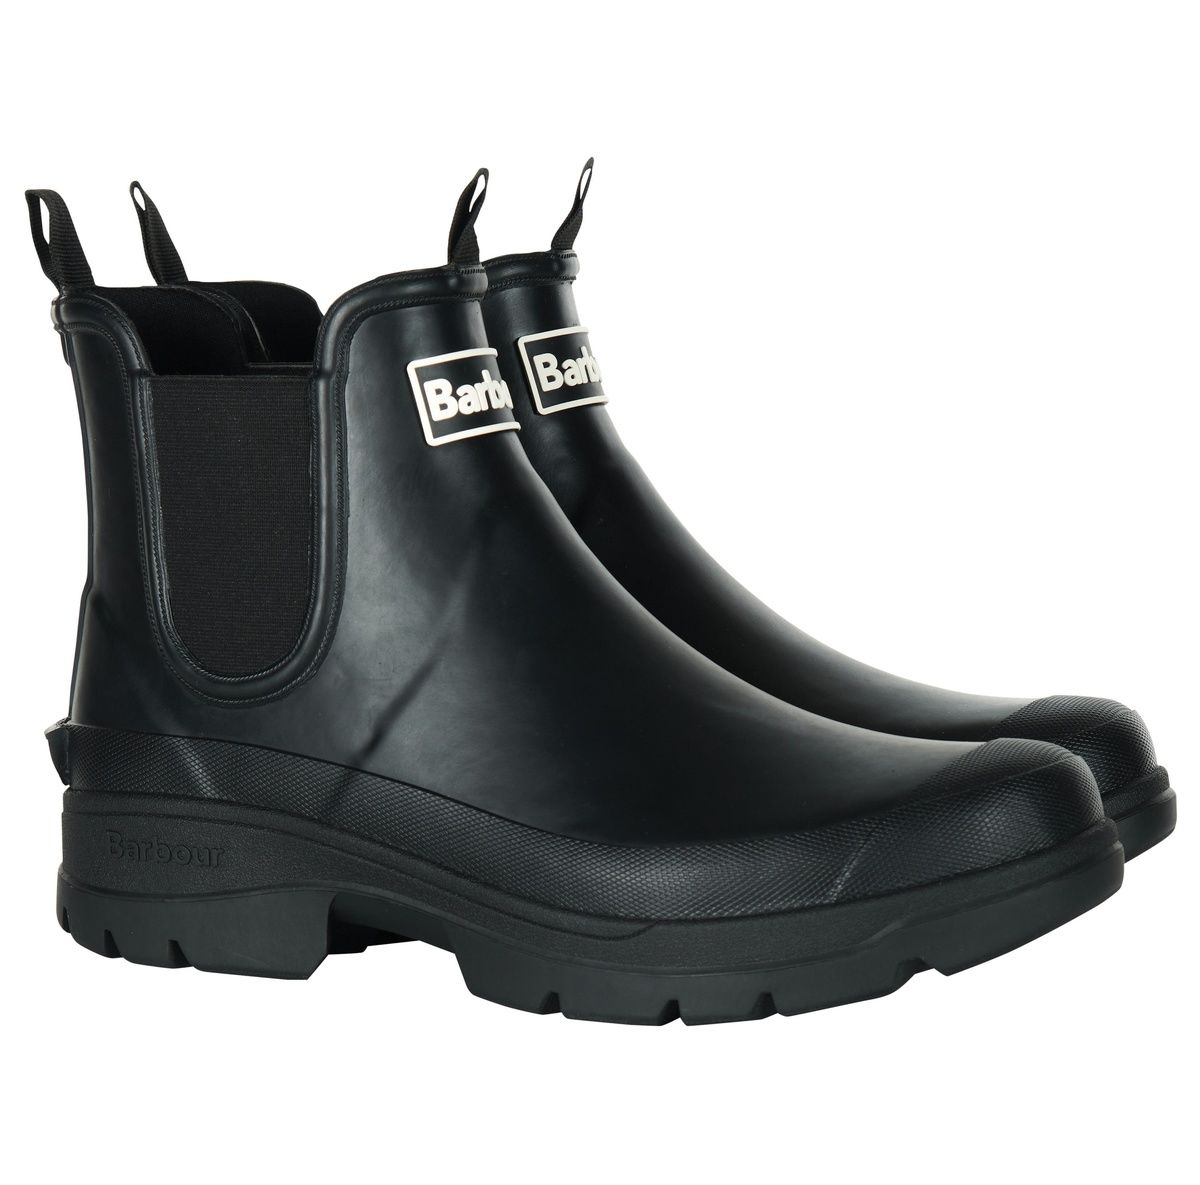 Barbour Nimbus Wellie Black Boots Mrf0028-Bk31 In Size 8 In Plain Black